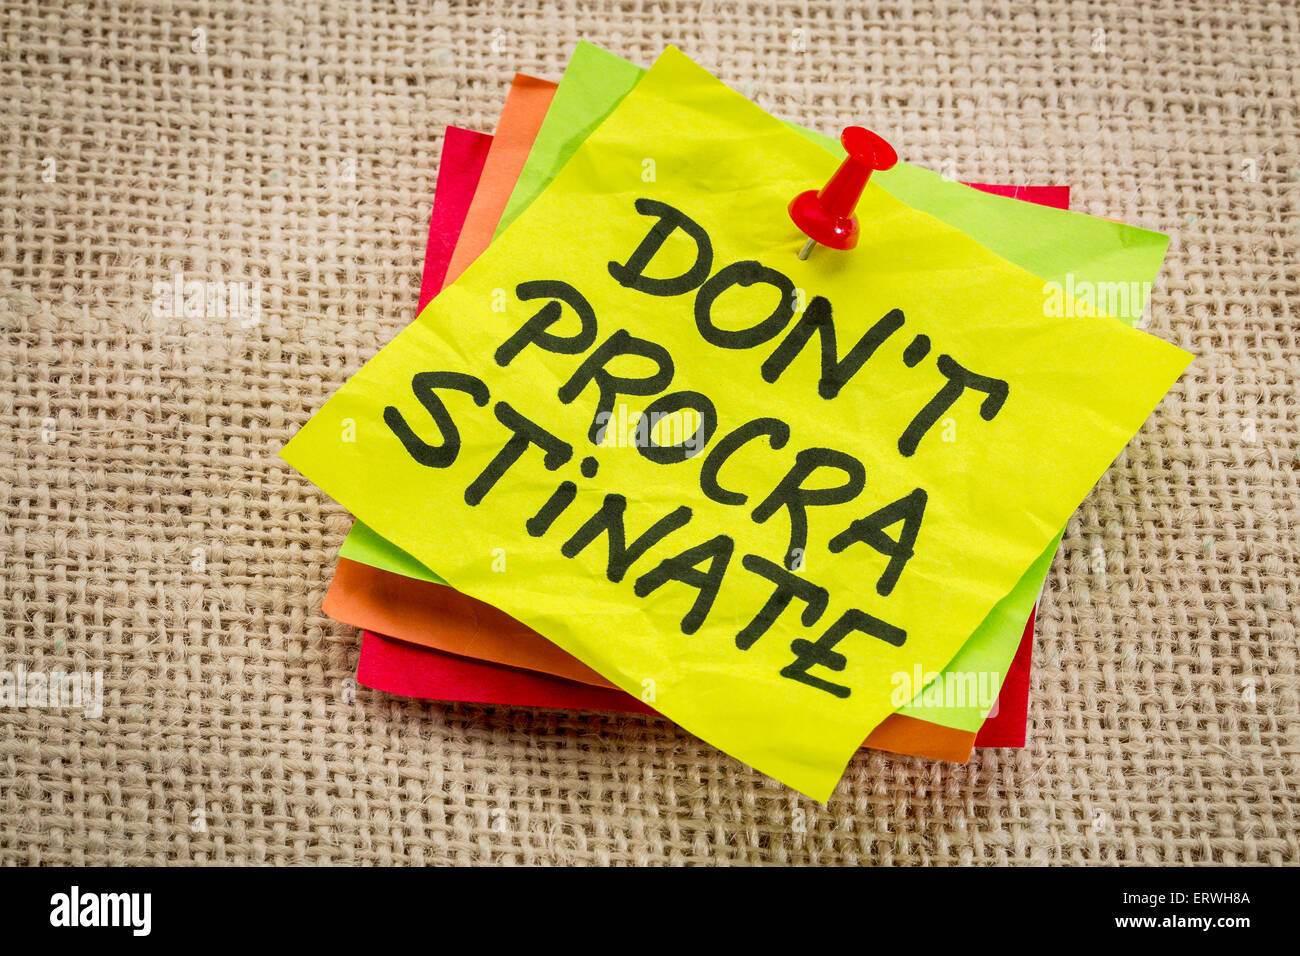 do not procrastinate reminder on a yellow sticky note Stock Photo